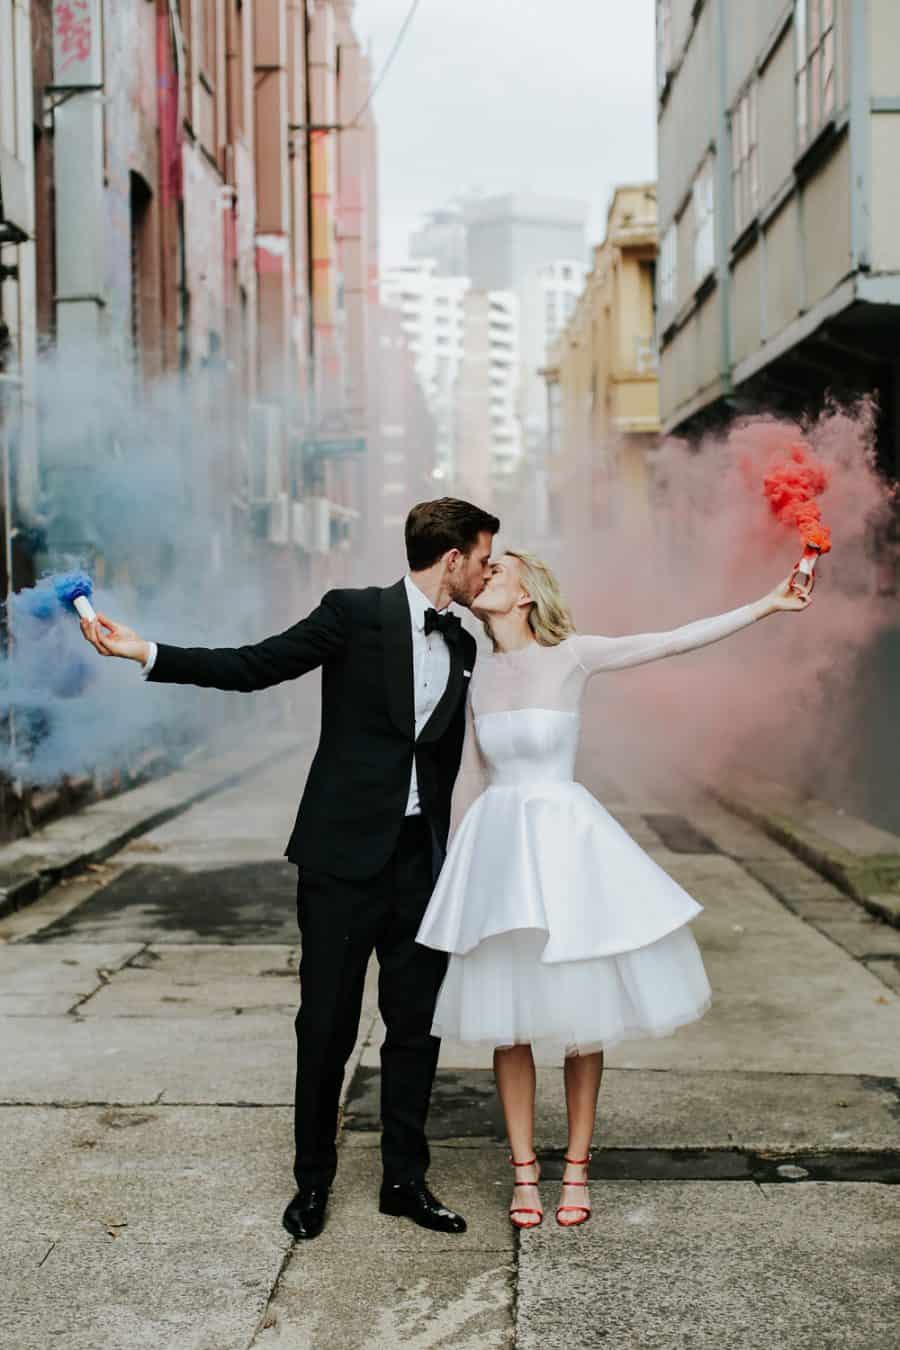 Top 10 weddings of 2016 - Fairground Follies wedding Sydney photography by Lara Hotz